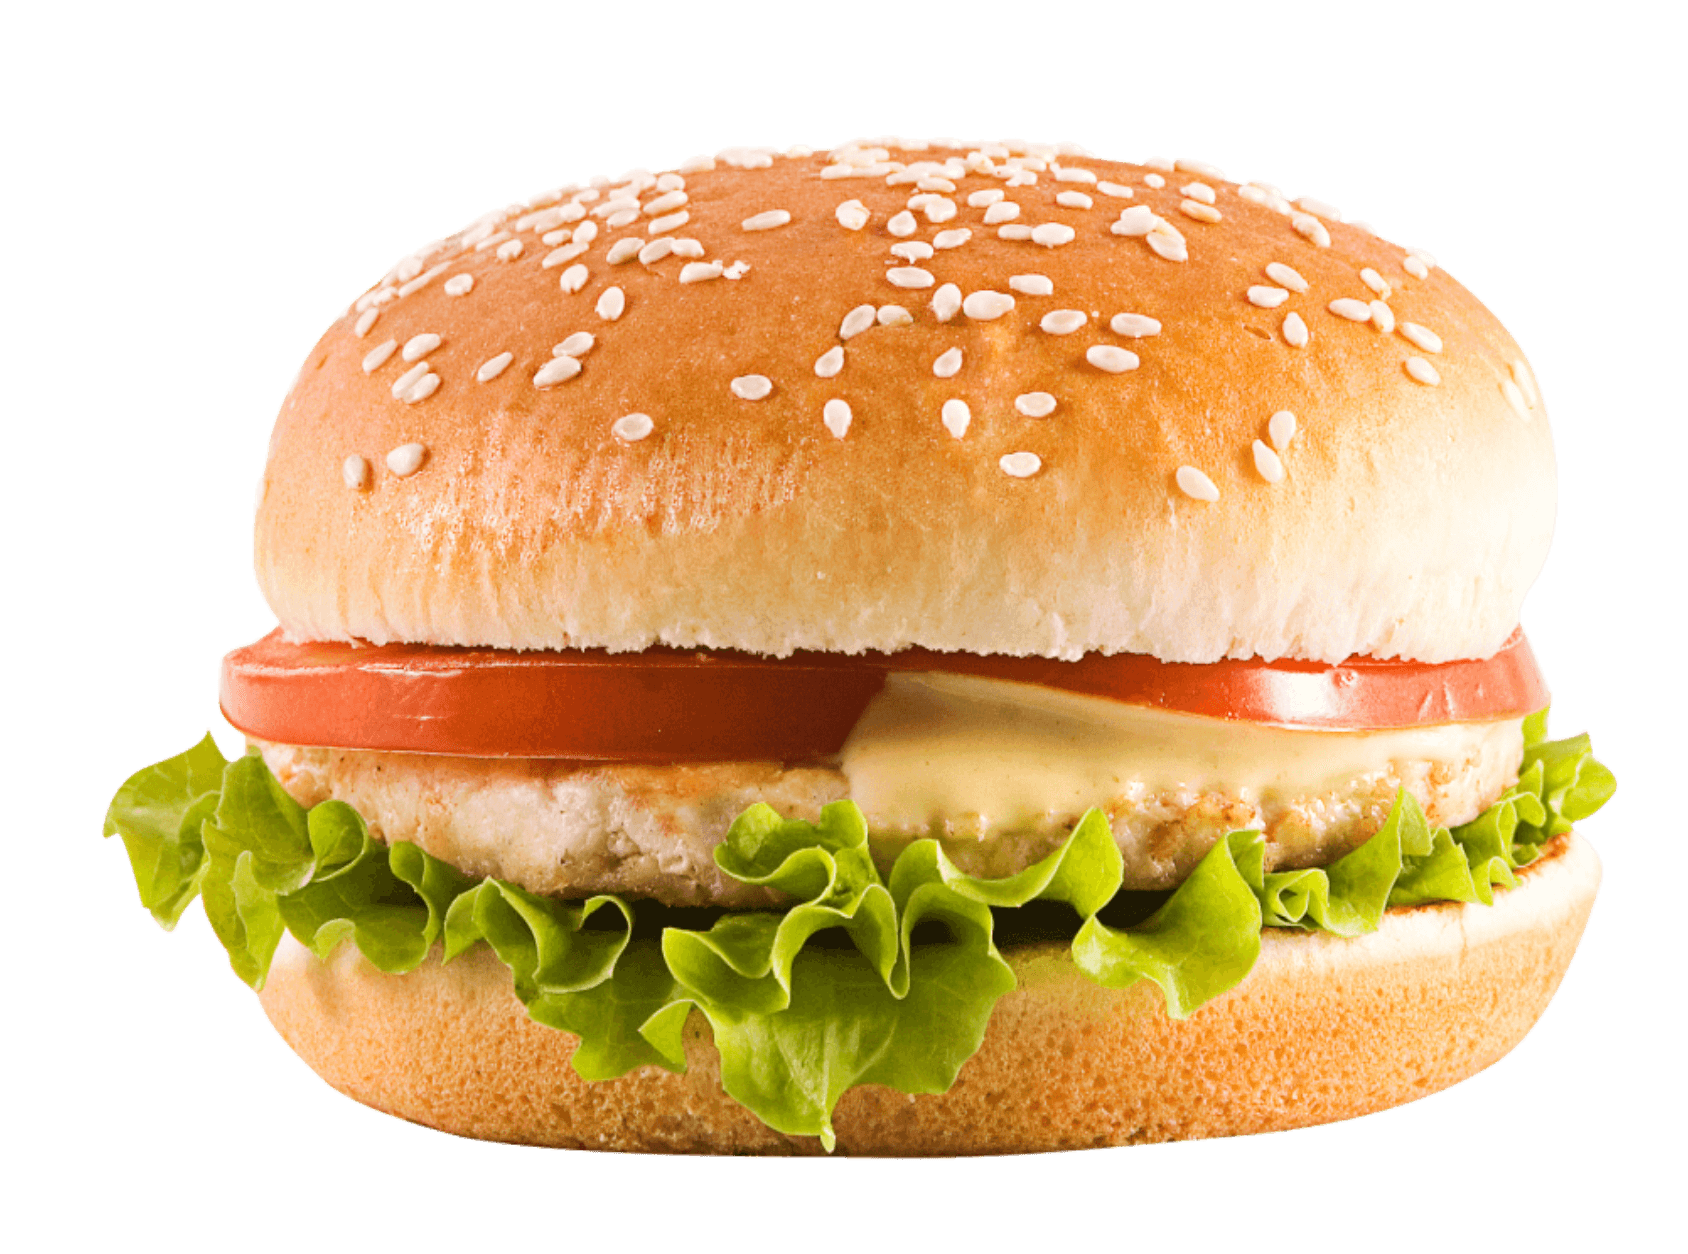 Burger Sandwich Png - Hamburger Burger Png Image Png Image, Transparent background PNG HD thumbnail